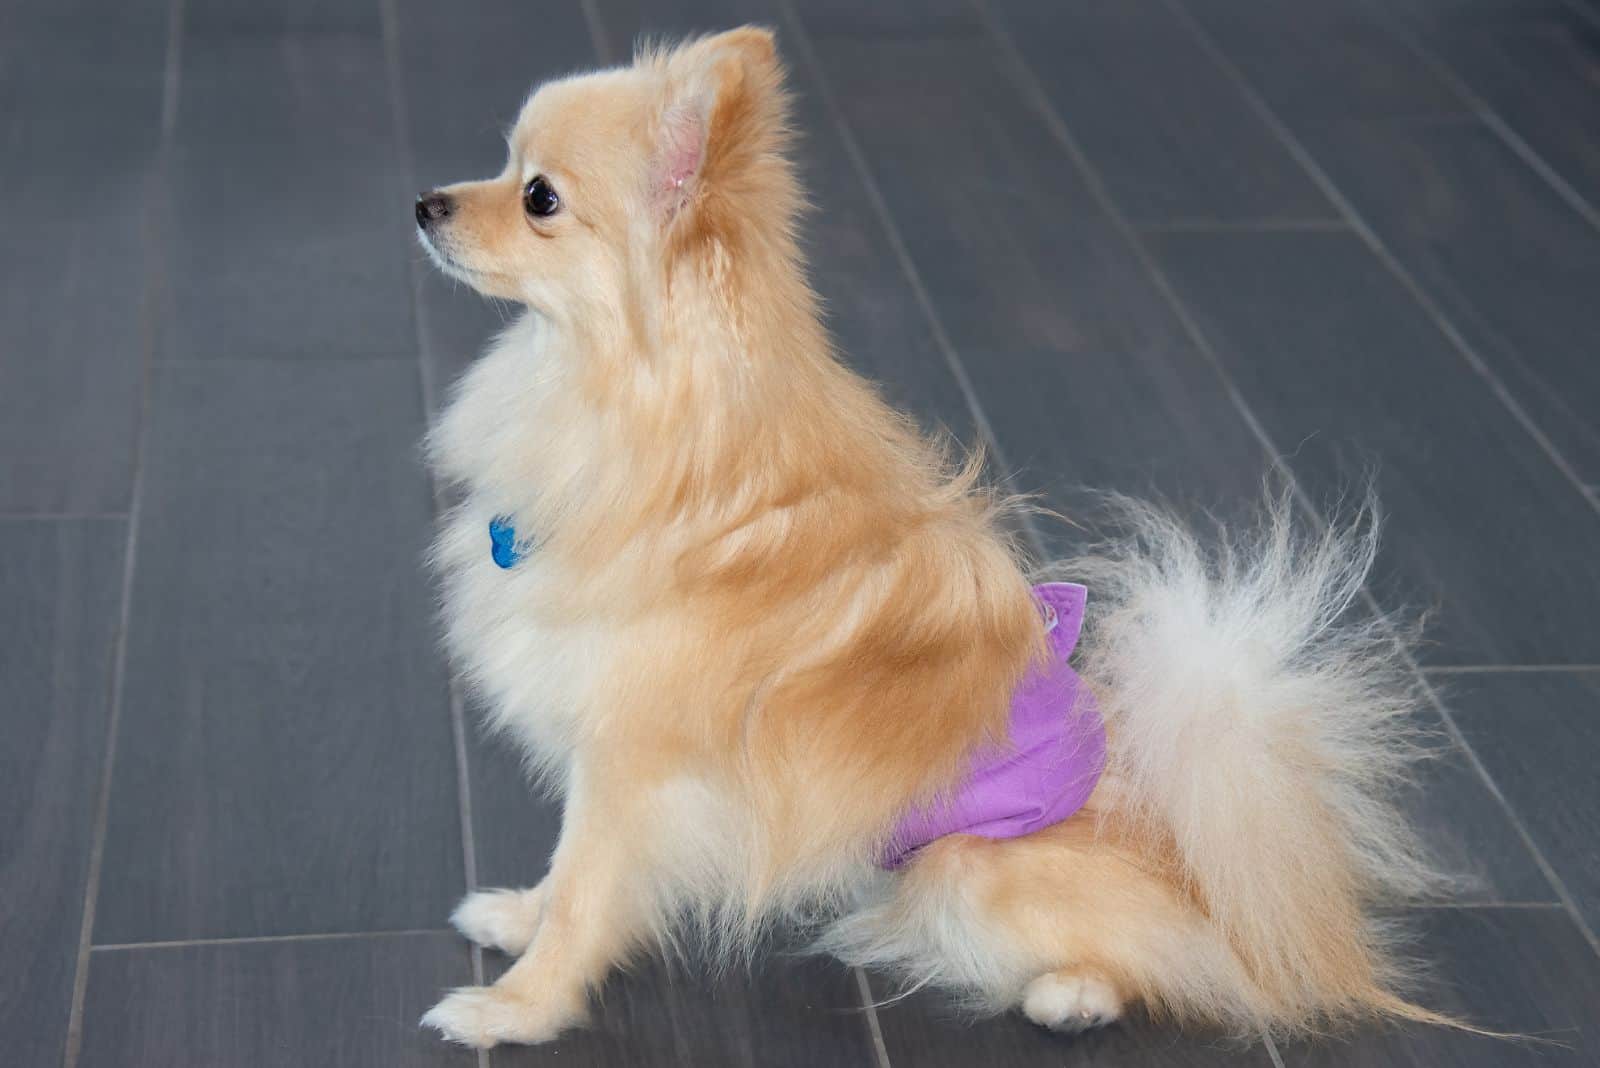 Cute male Pomeranian dog in pee diaper secured